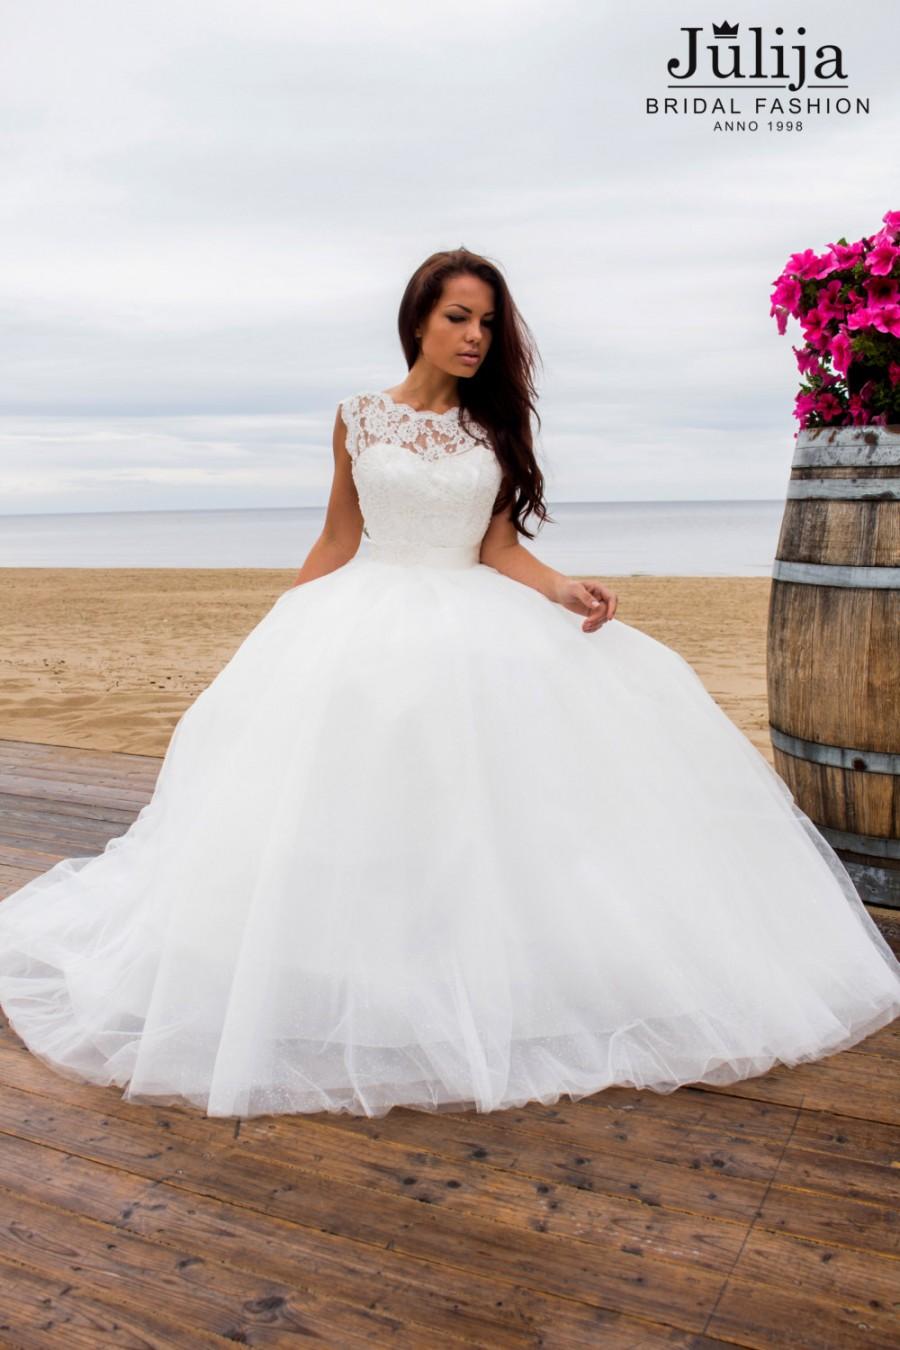 Wedding - Lace wedding dress, unique wedding,wedding gown, bridal gown, open back, tulle skirt, luxury wedding dress 